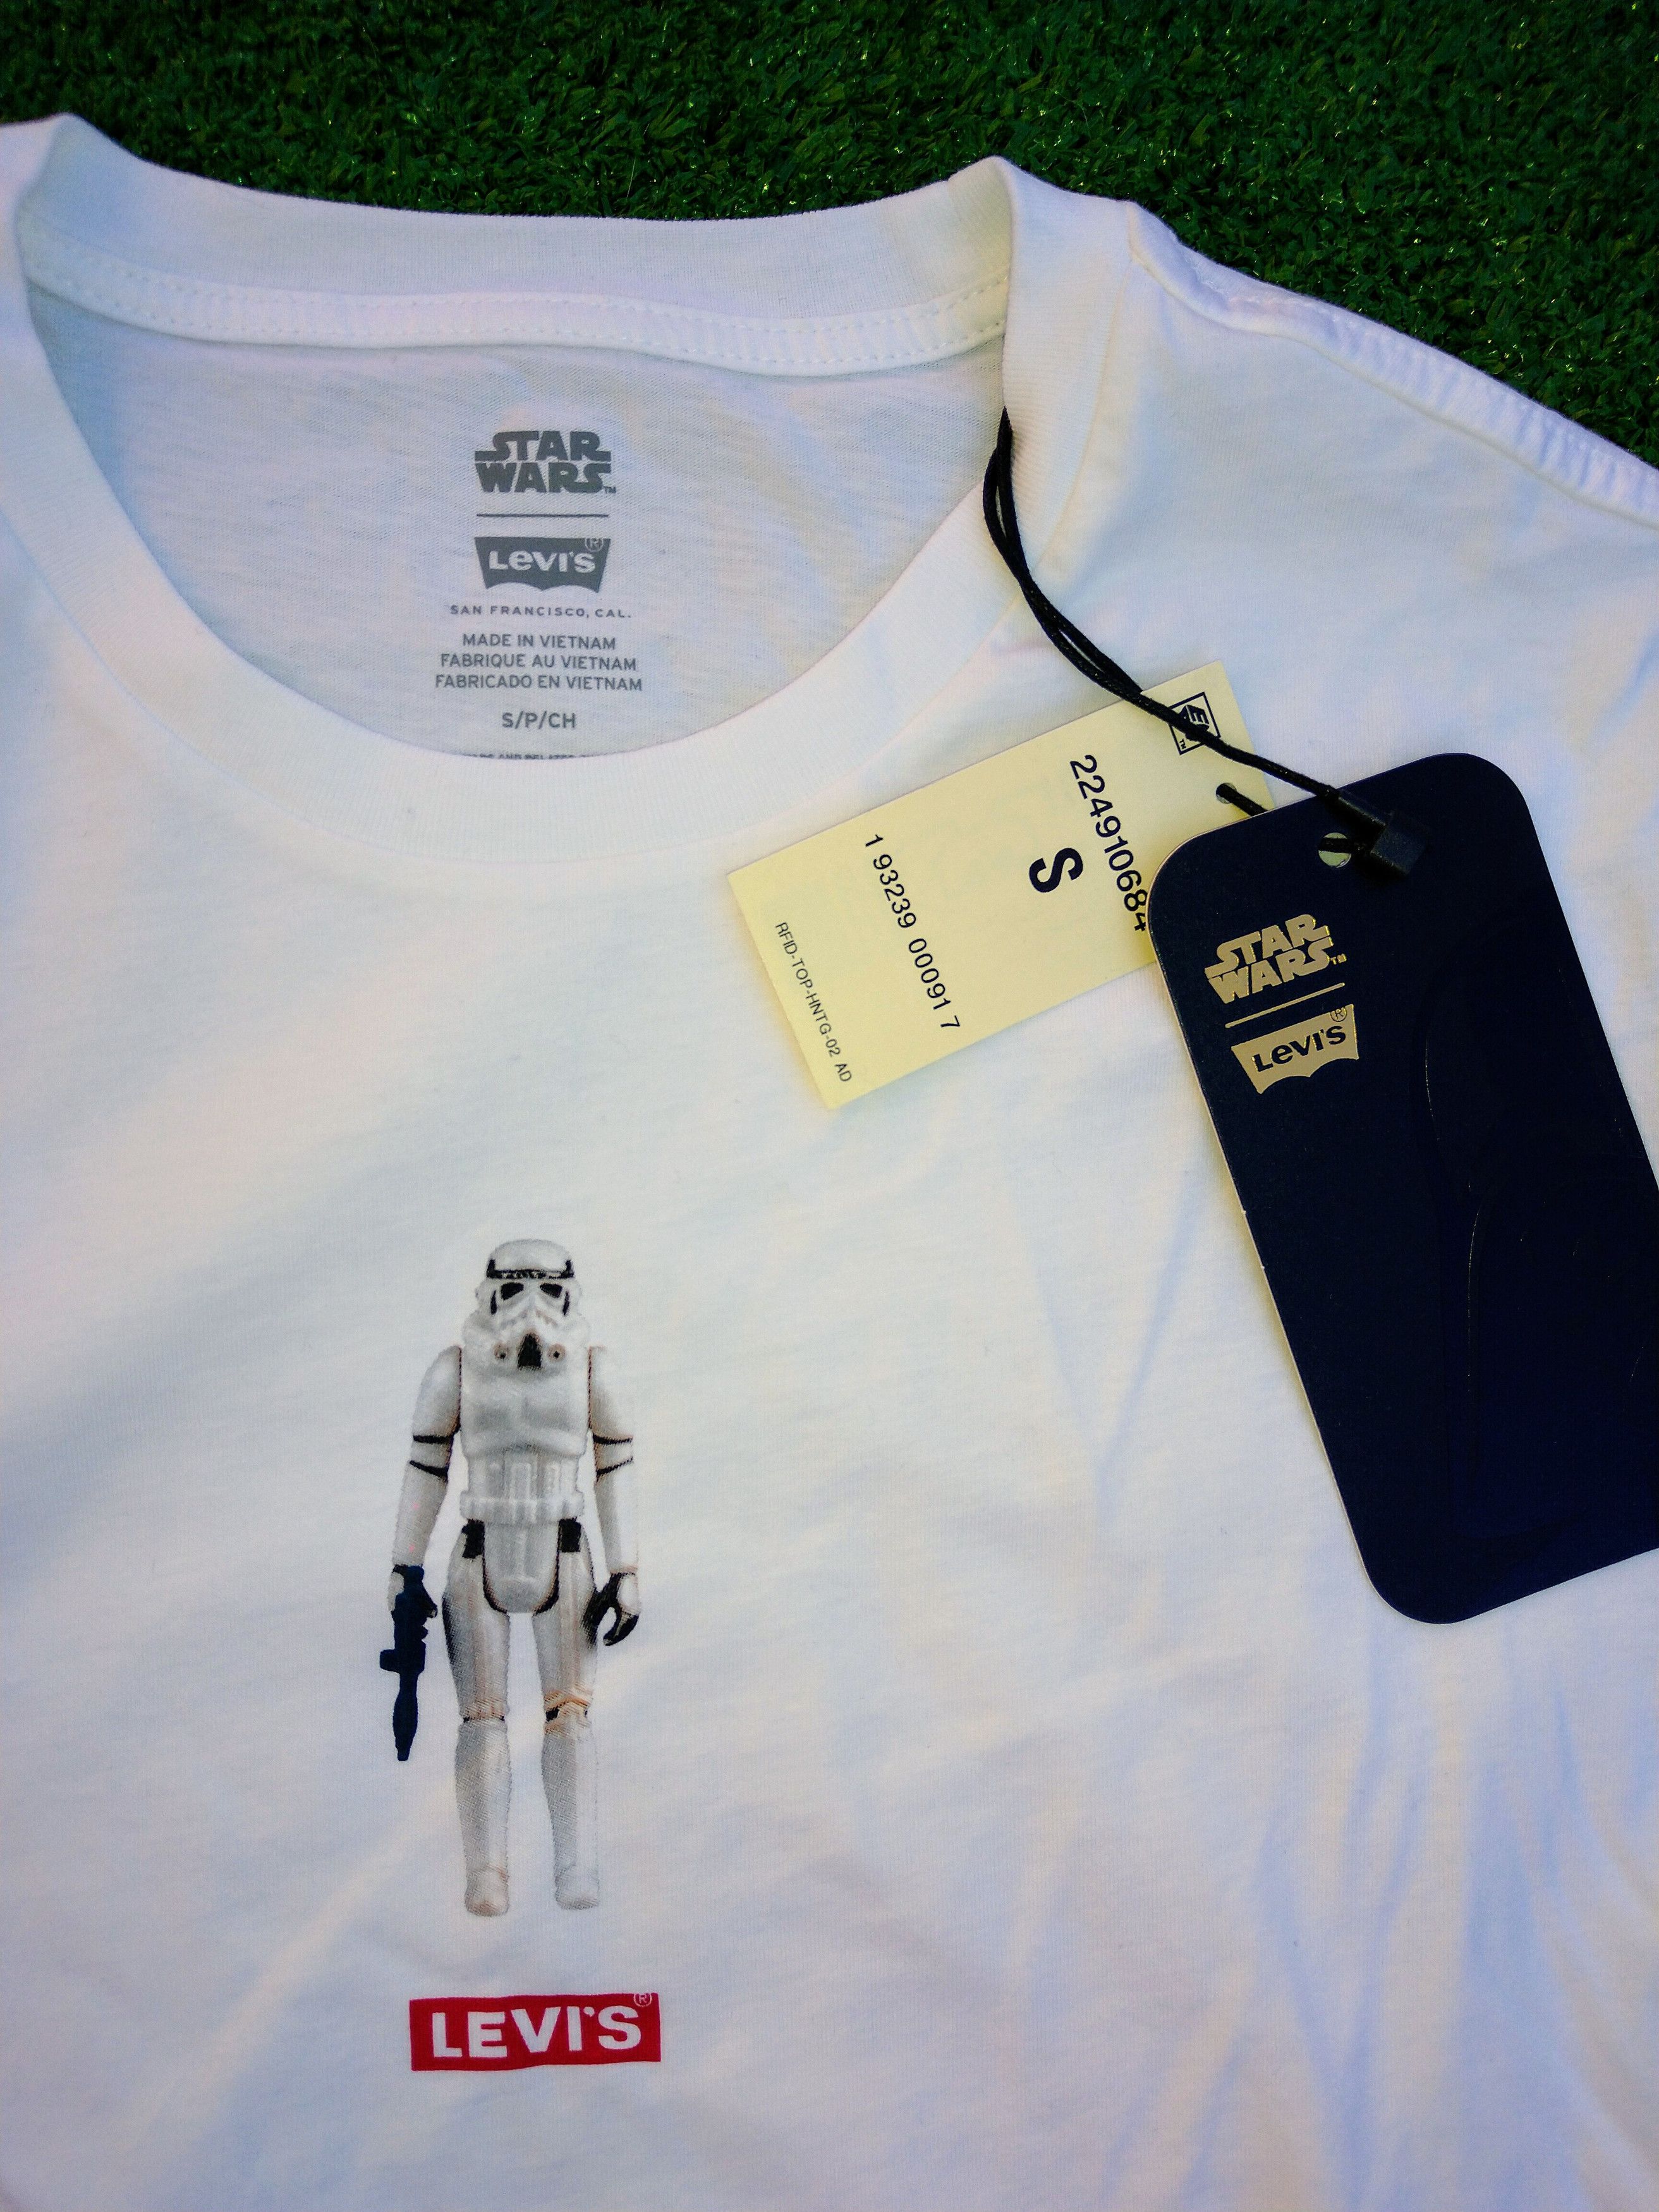 Levi's STAR WARS x LEVIS Stormtrooper Action Figure Toy Mens Shirt Size US S / EU 44-46 / 1 - 2 Preview